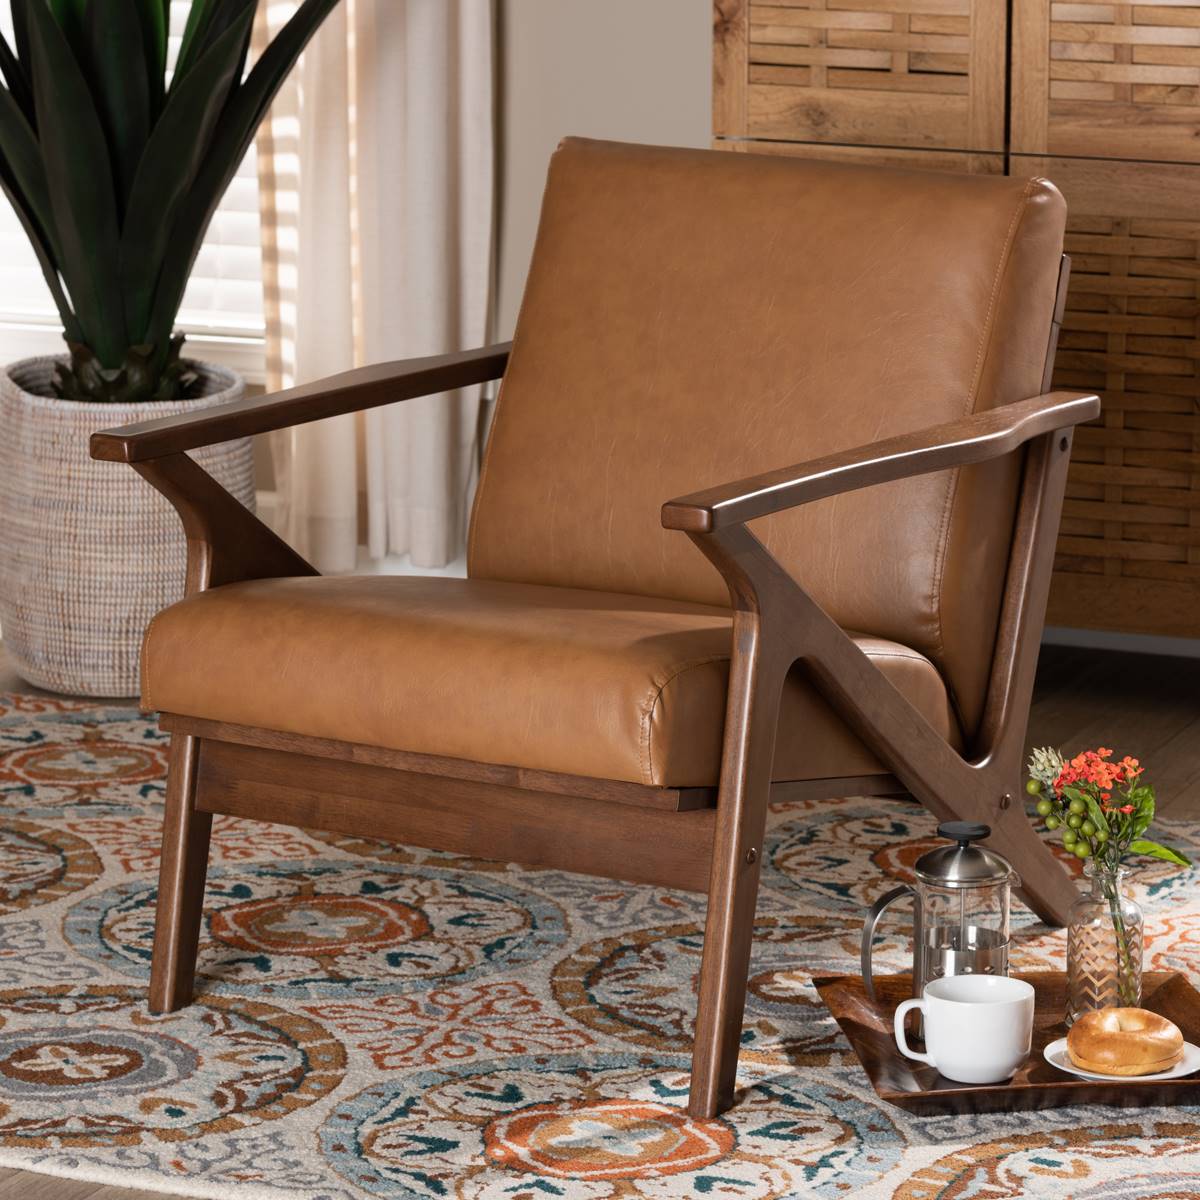 Baxton Studio Bianca Modern Wood & Leather Effect Lounge Chair